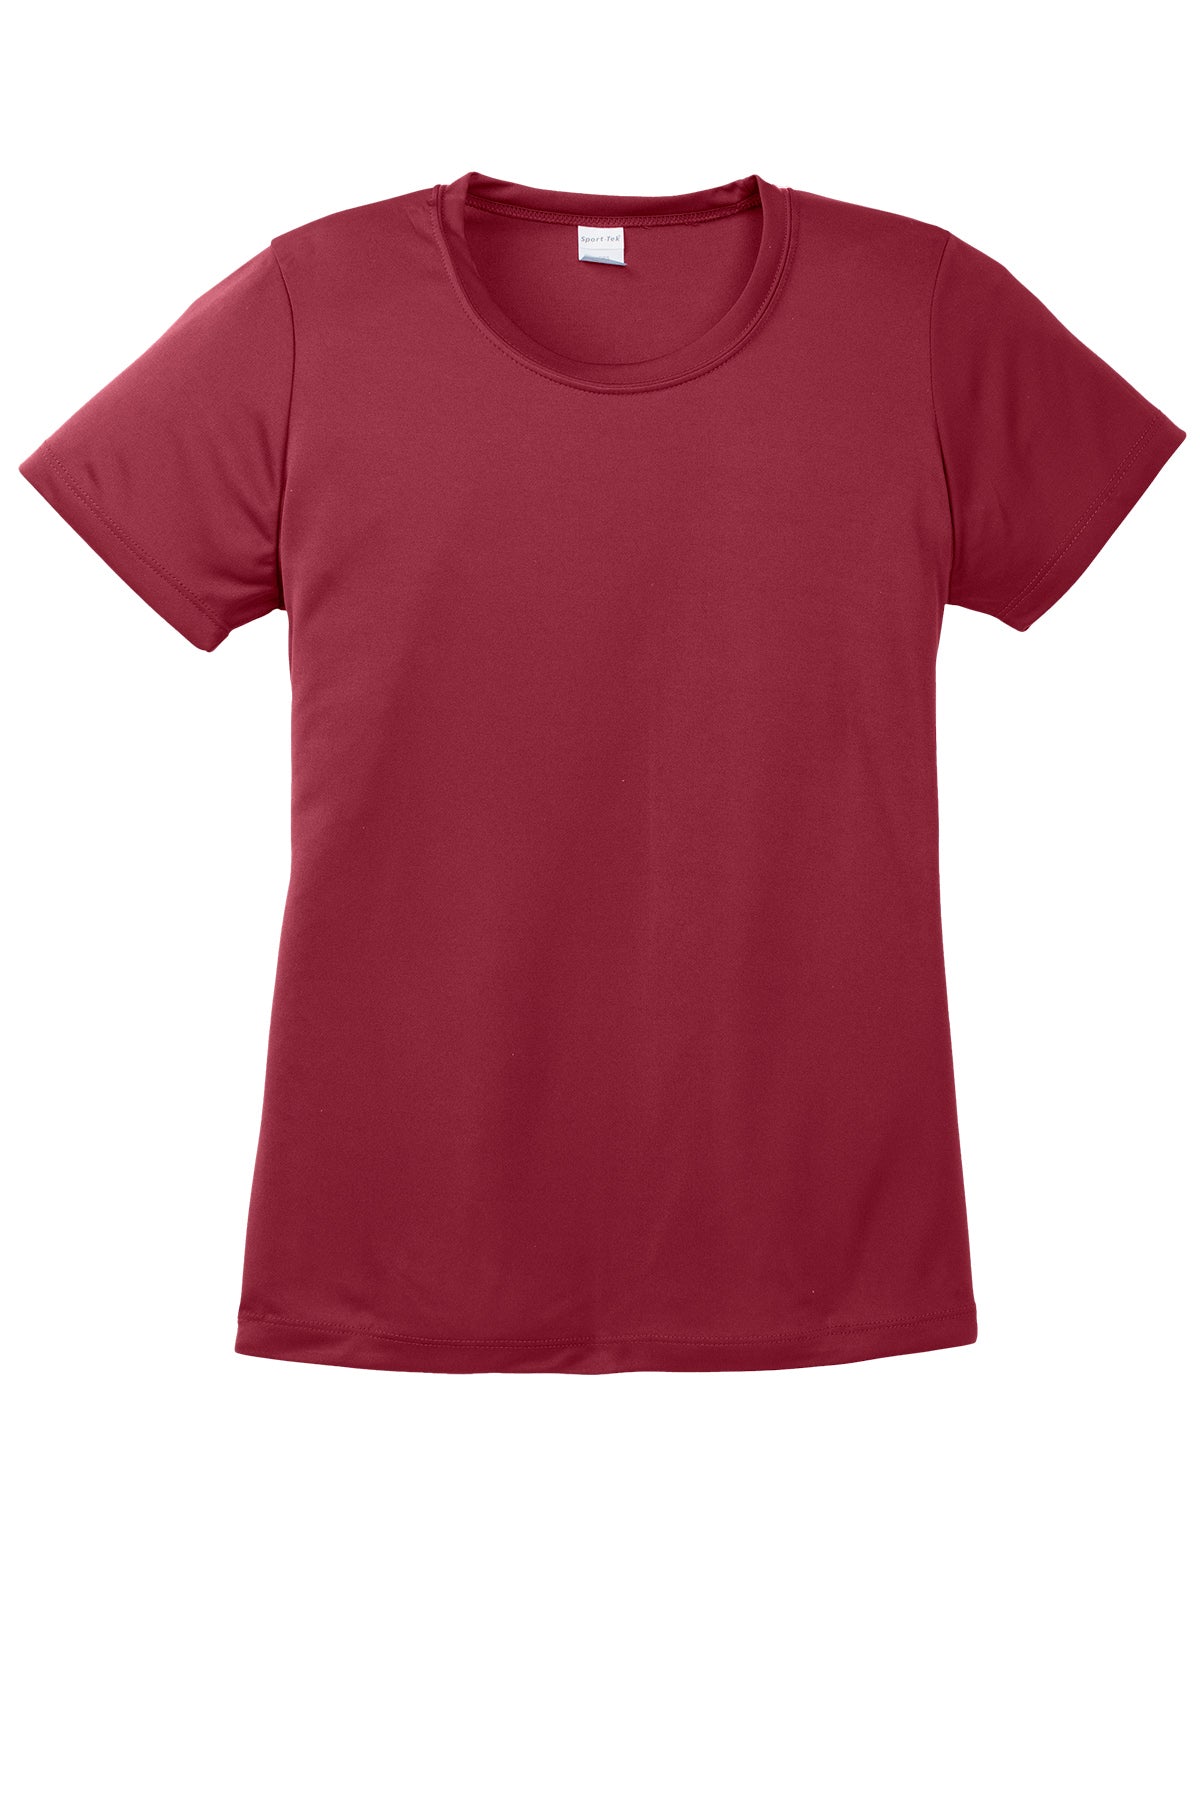 Sport-Tek Lst350 Polyester Ladies T-Shirt Ad Small / Cardinal